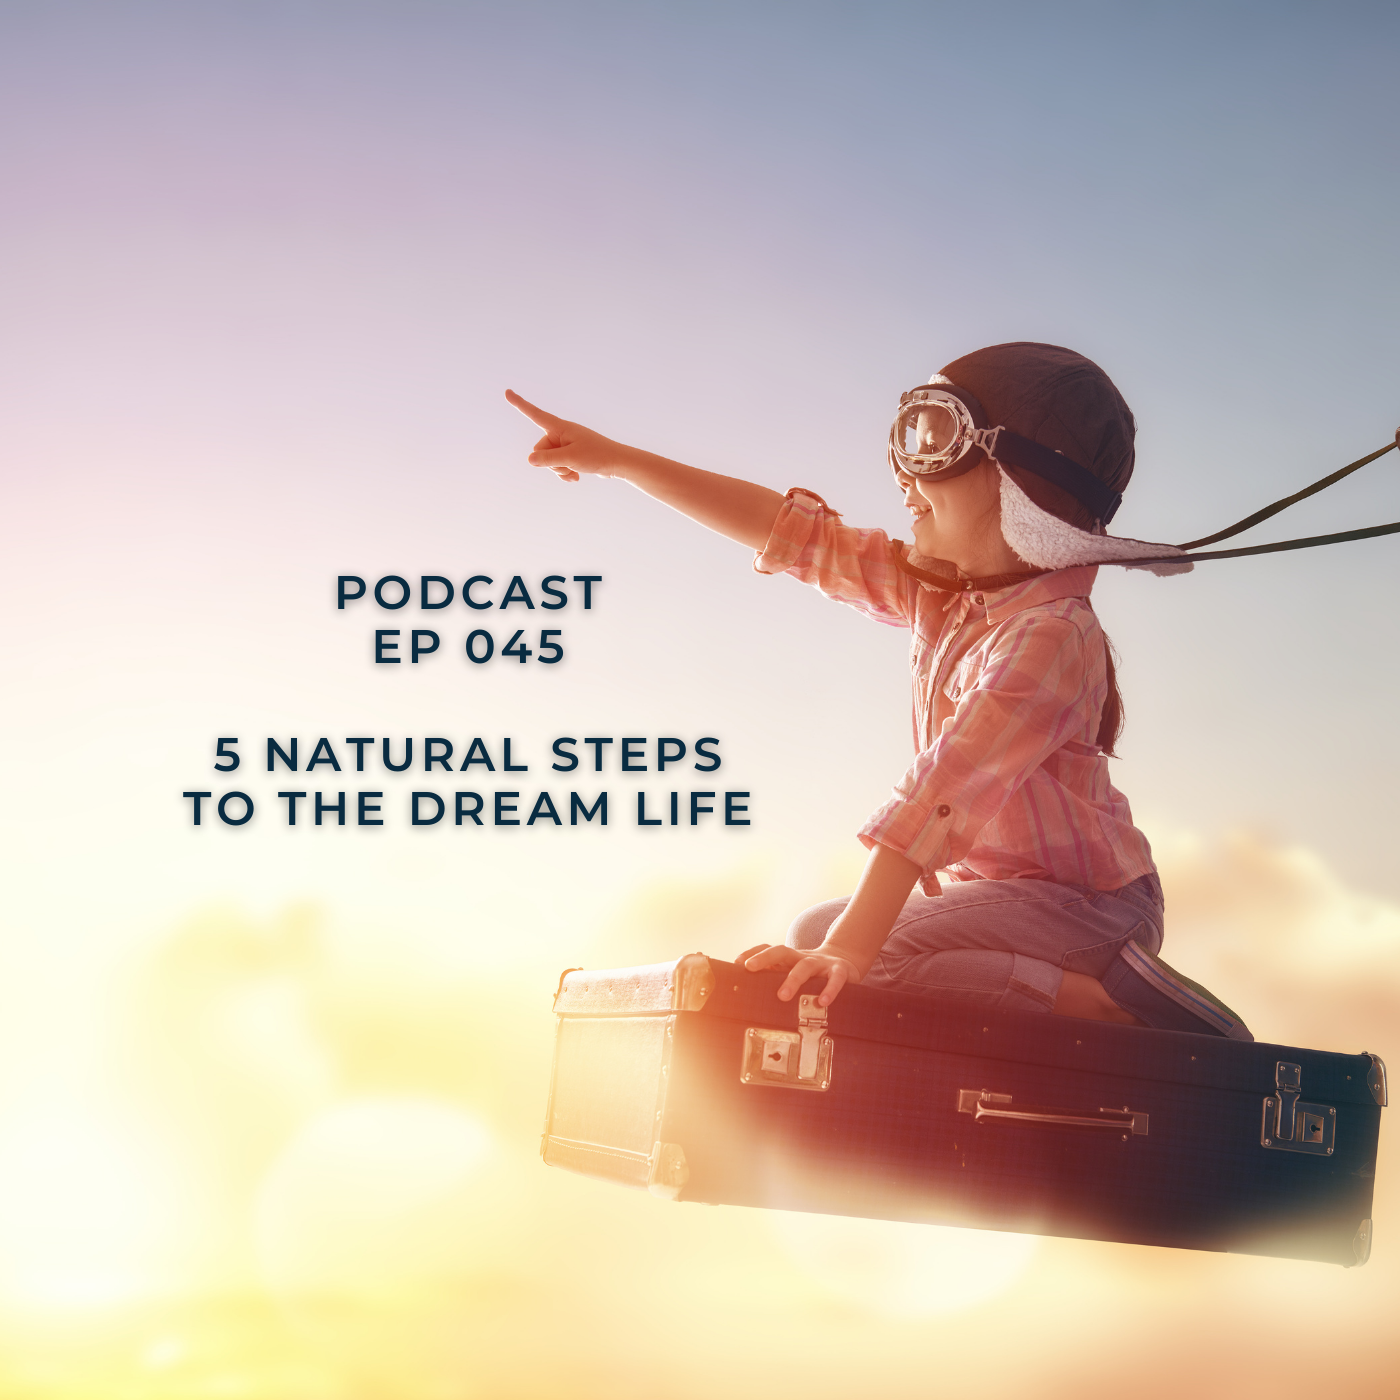 5 Natural Steps to a Dream Life